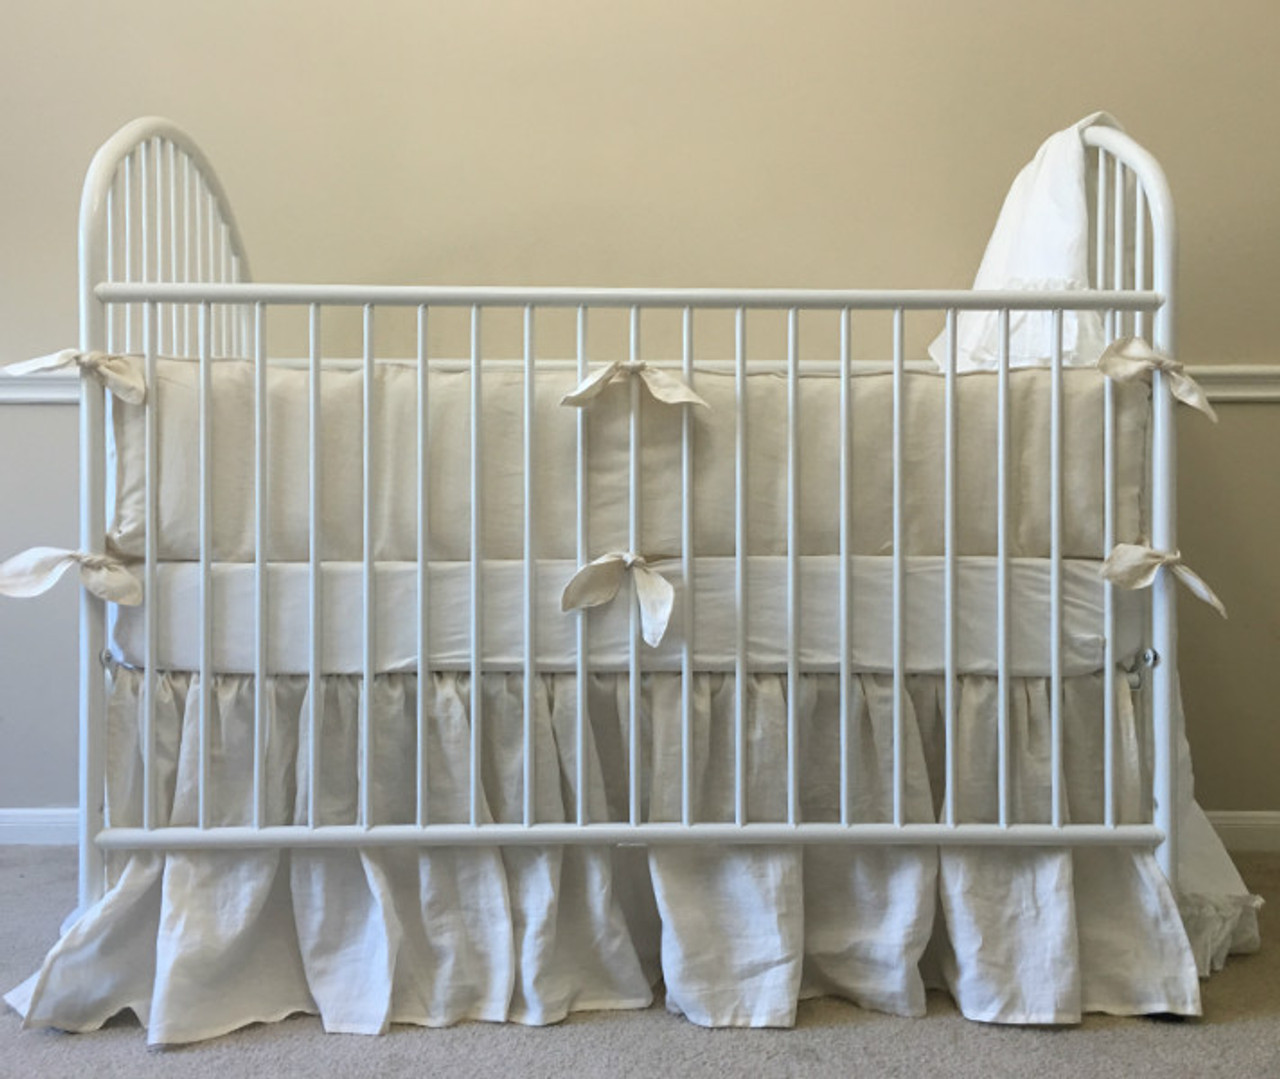 ivory baby bedding